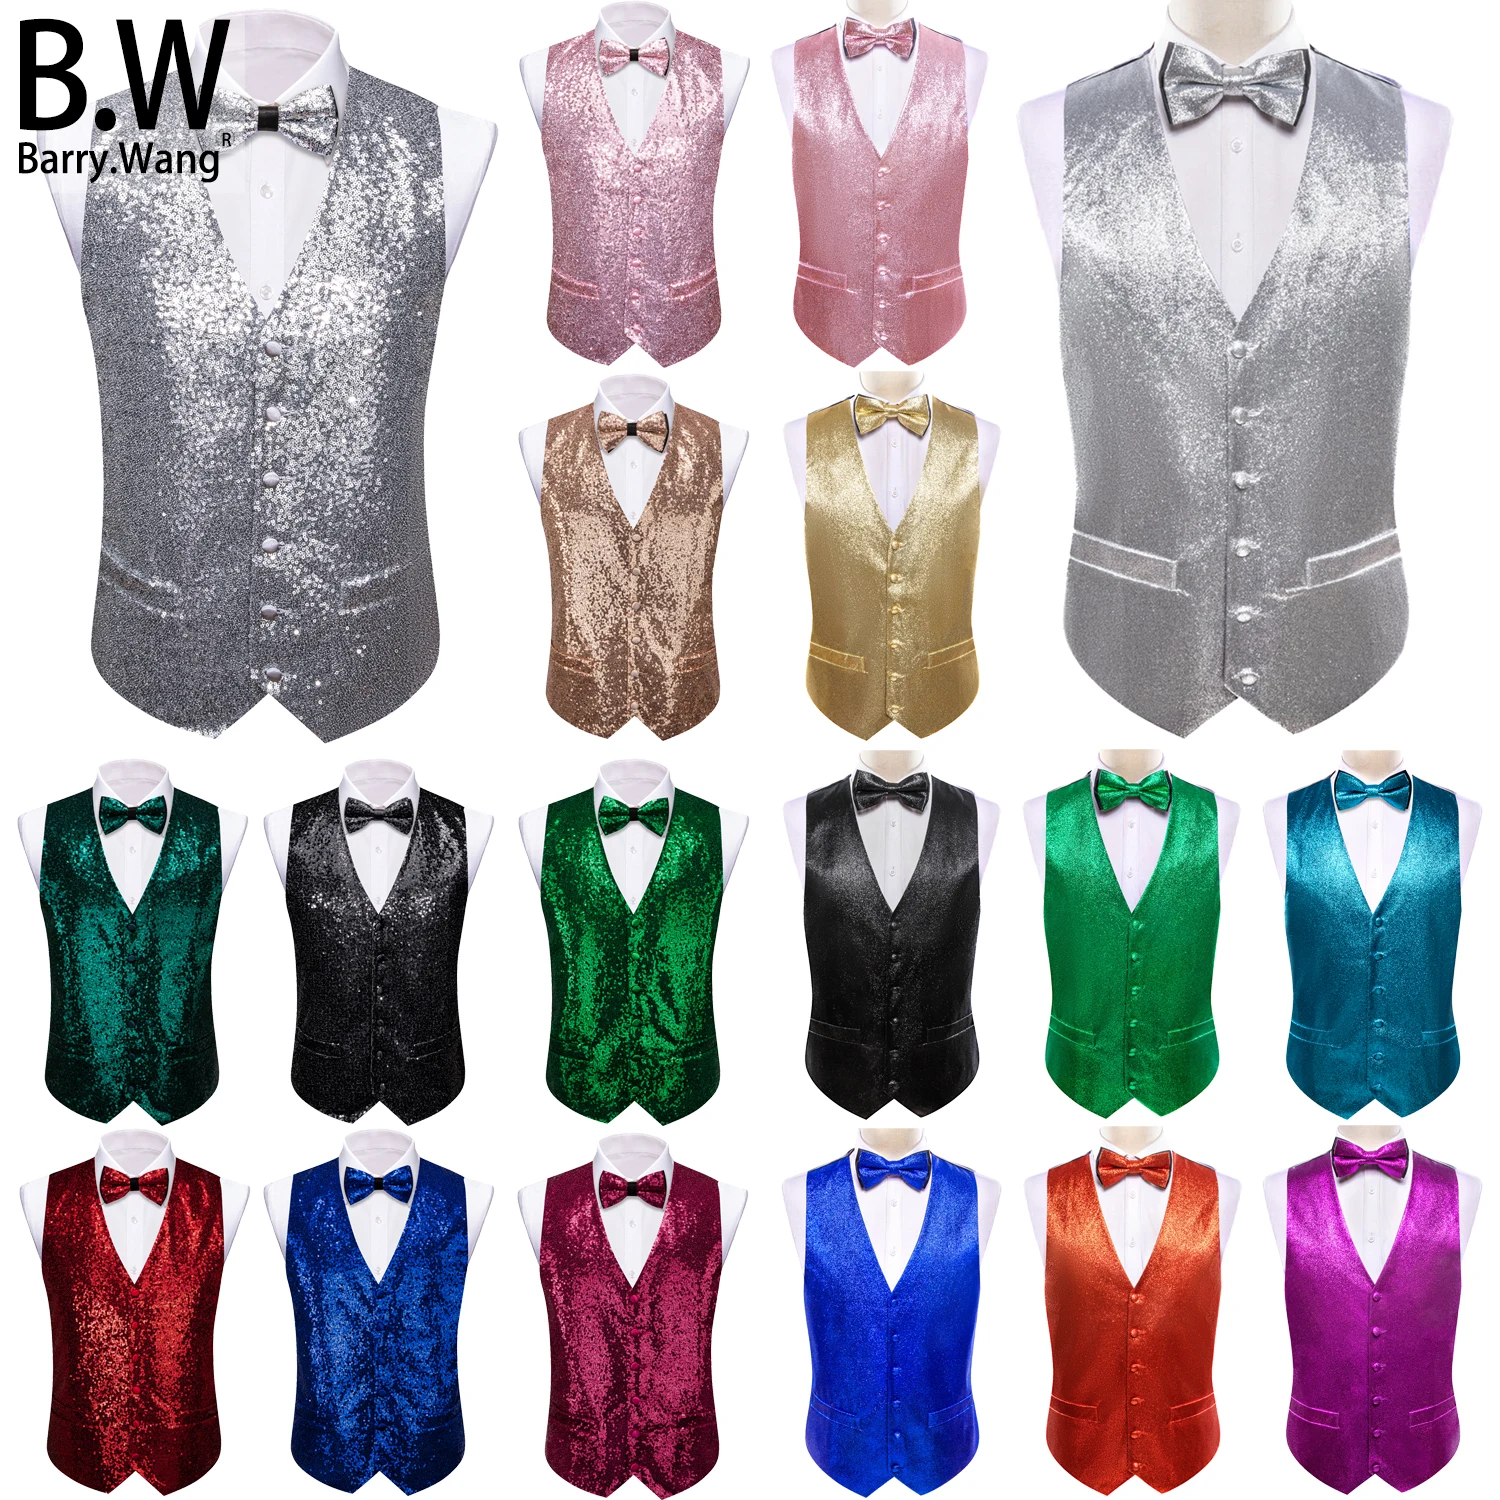 

Barry.Wang Nolvety Shining Men Vest Casual Stylish 15 Colors Waistcoat with Bowtie Sleeveless Jacket Male Wedding Party Prom